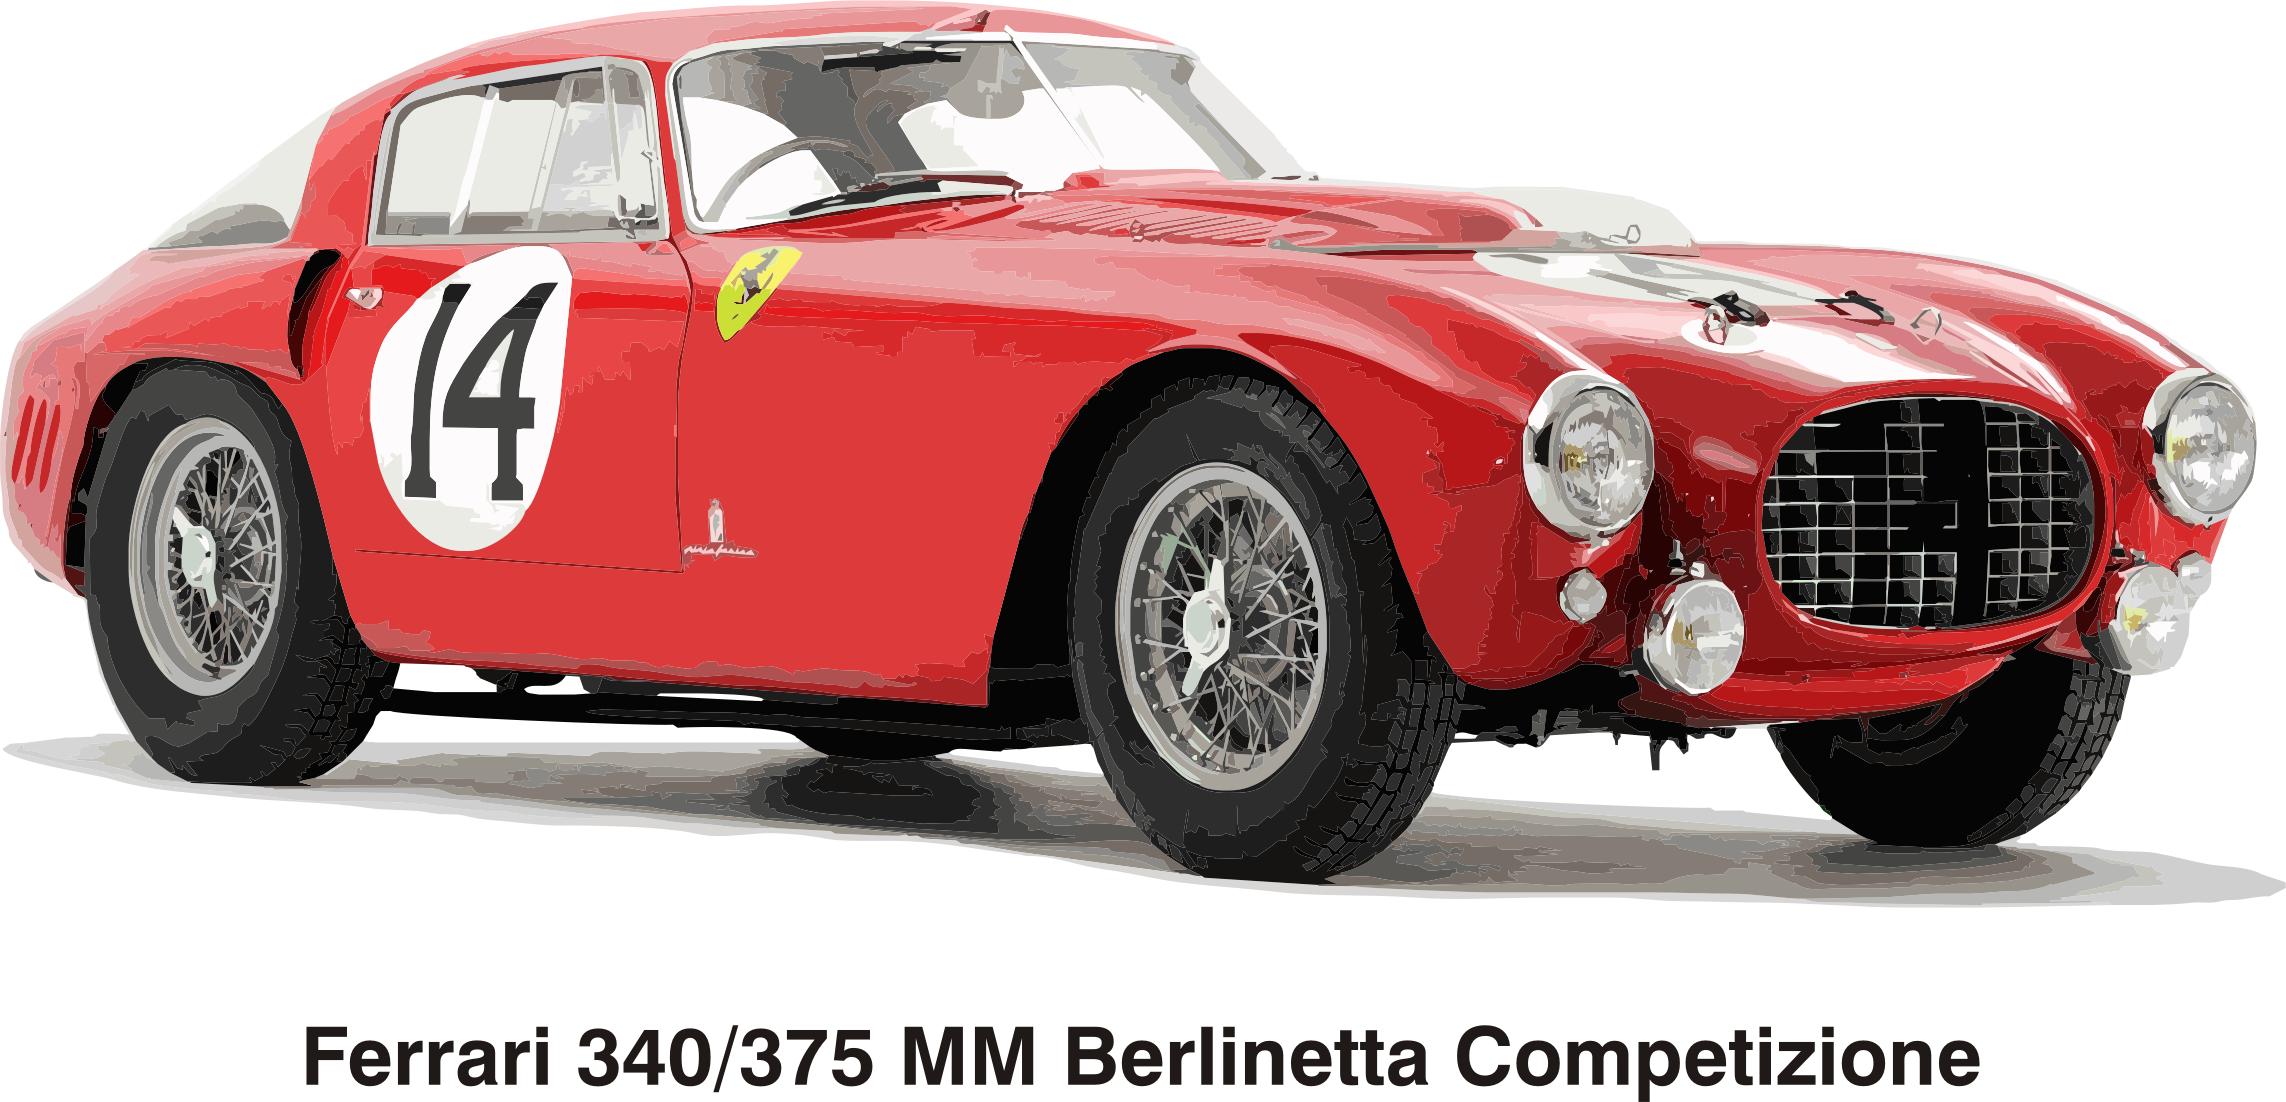 Ferrari 340/375 MM Berlinetta Competizione, year 1953 Icons PNG 